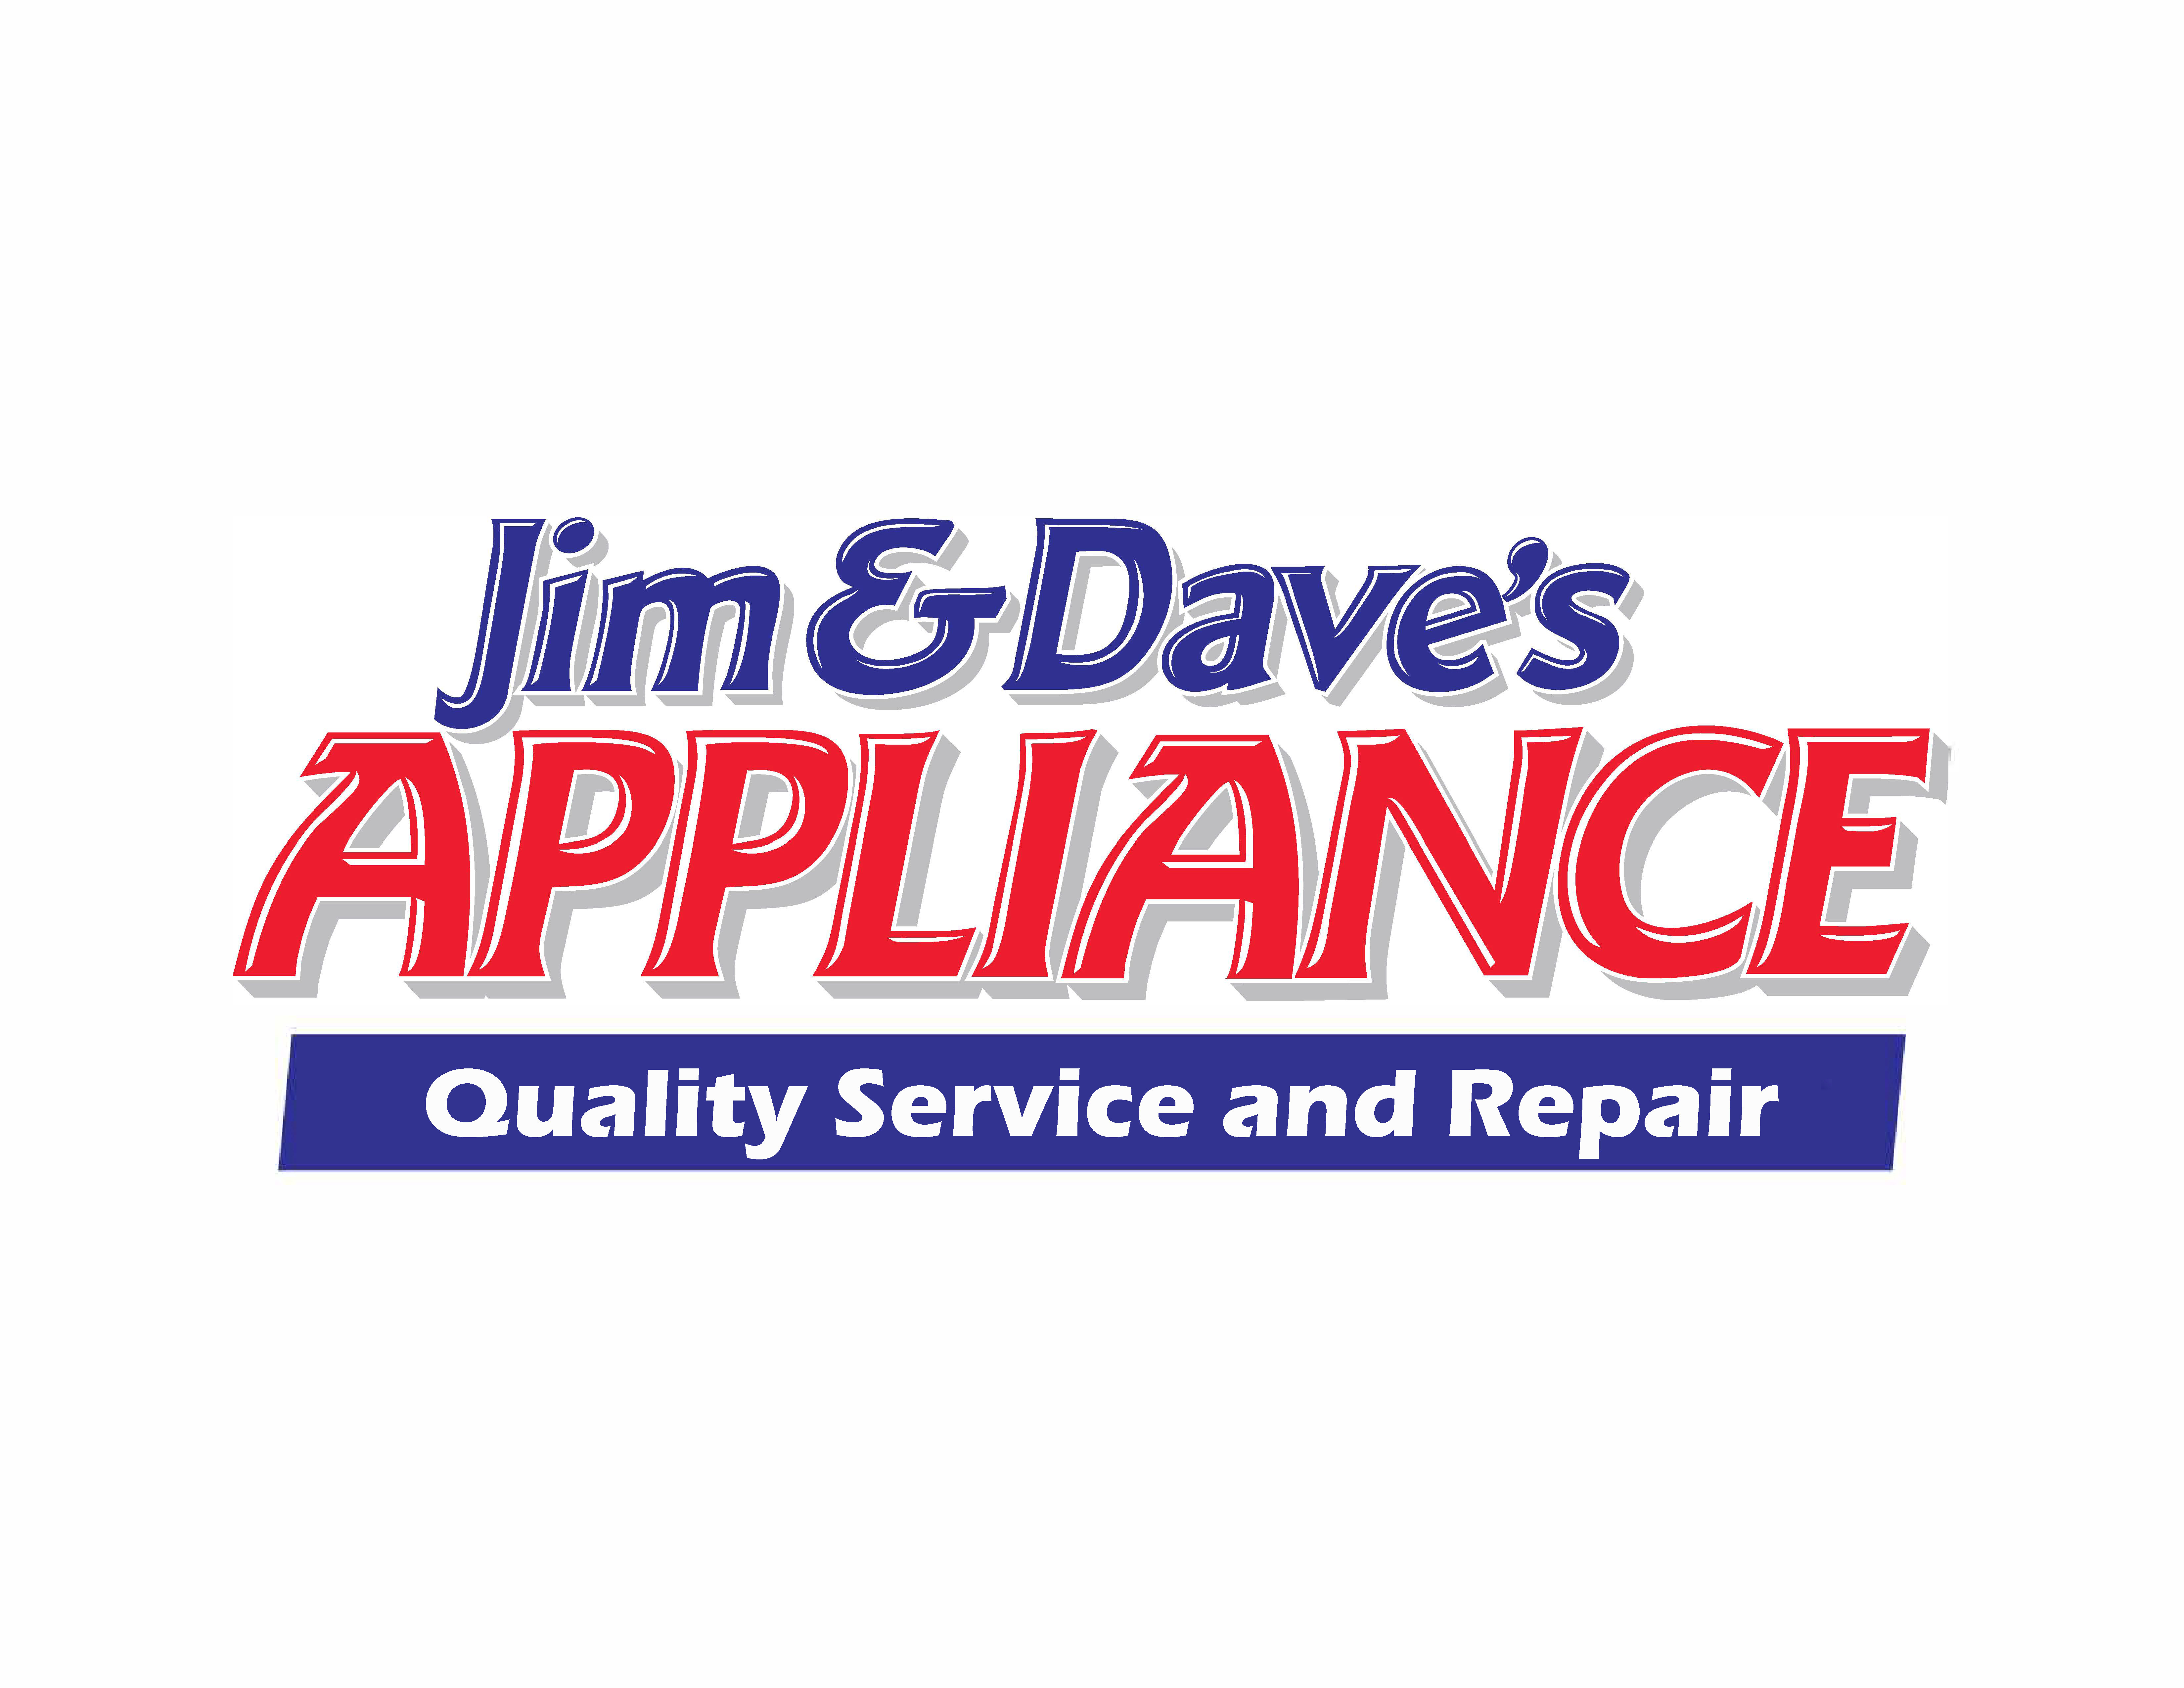 Jim & Daves Appliance